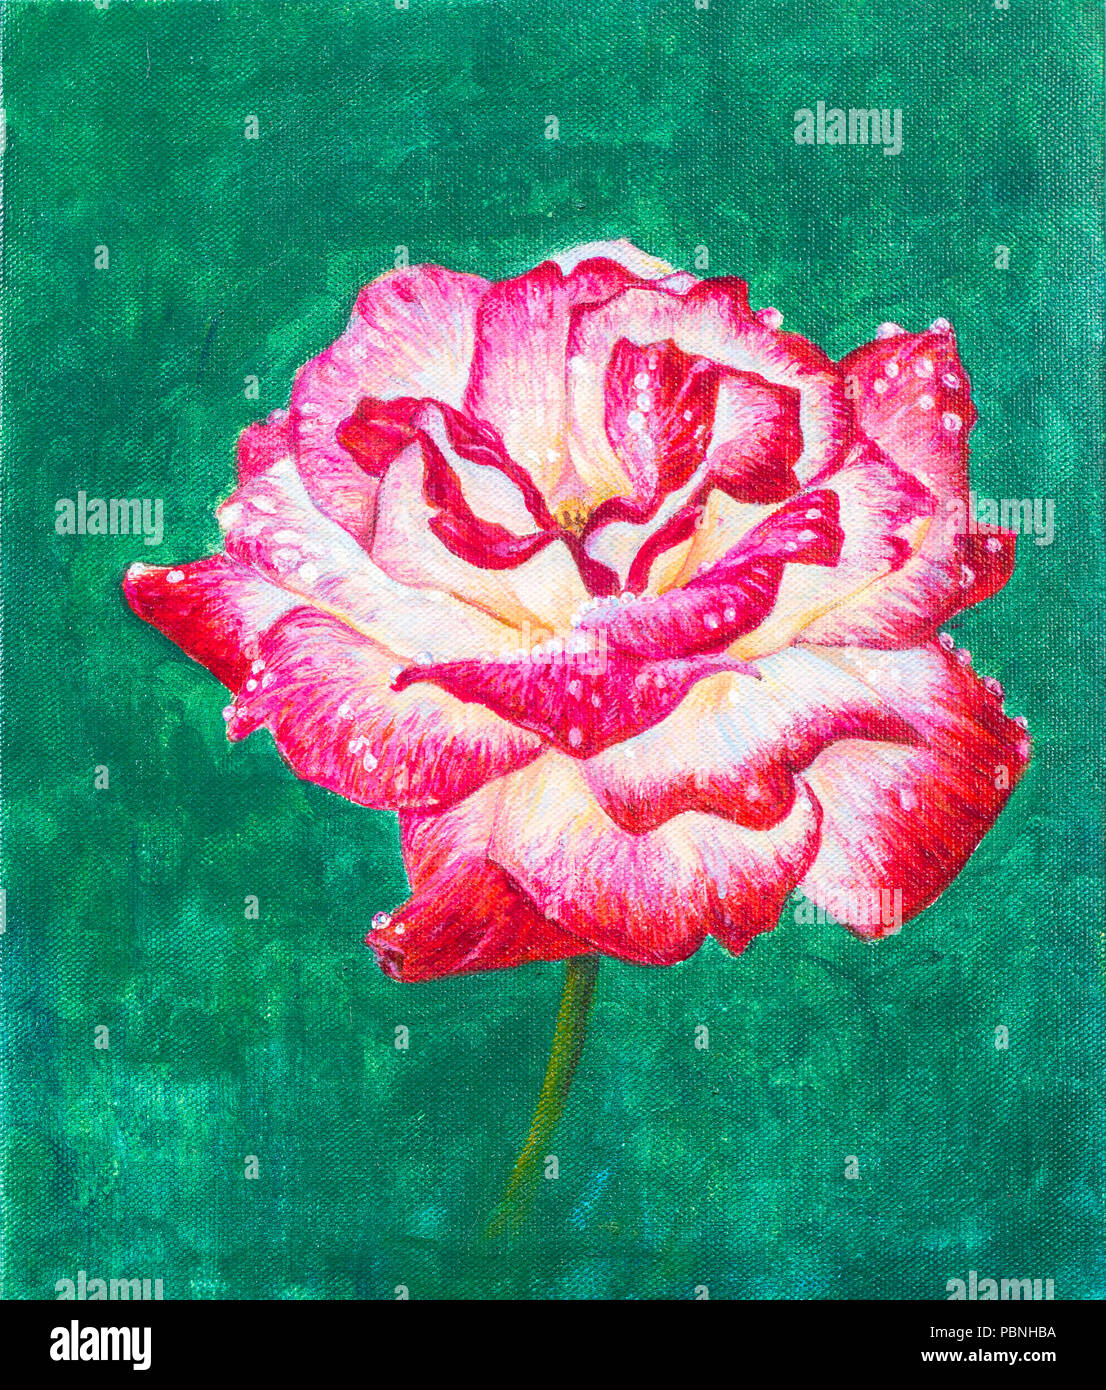 Pintura acrílica rosa roja fotografías e imágenes de alta resolución - Alamy